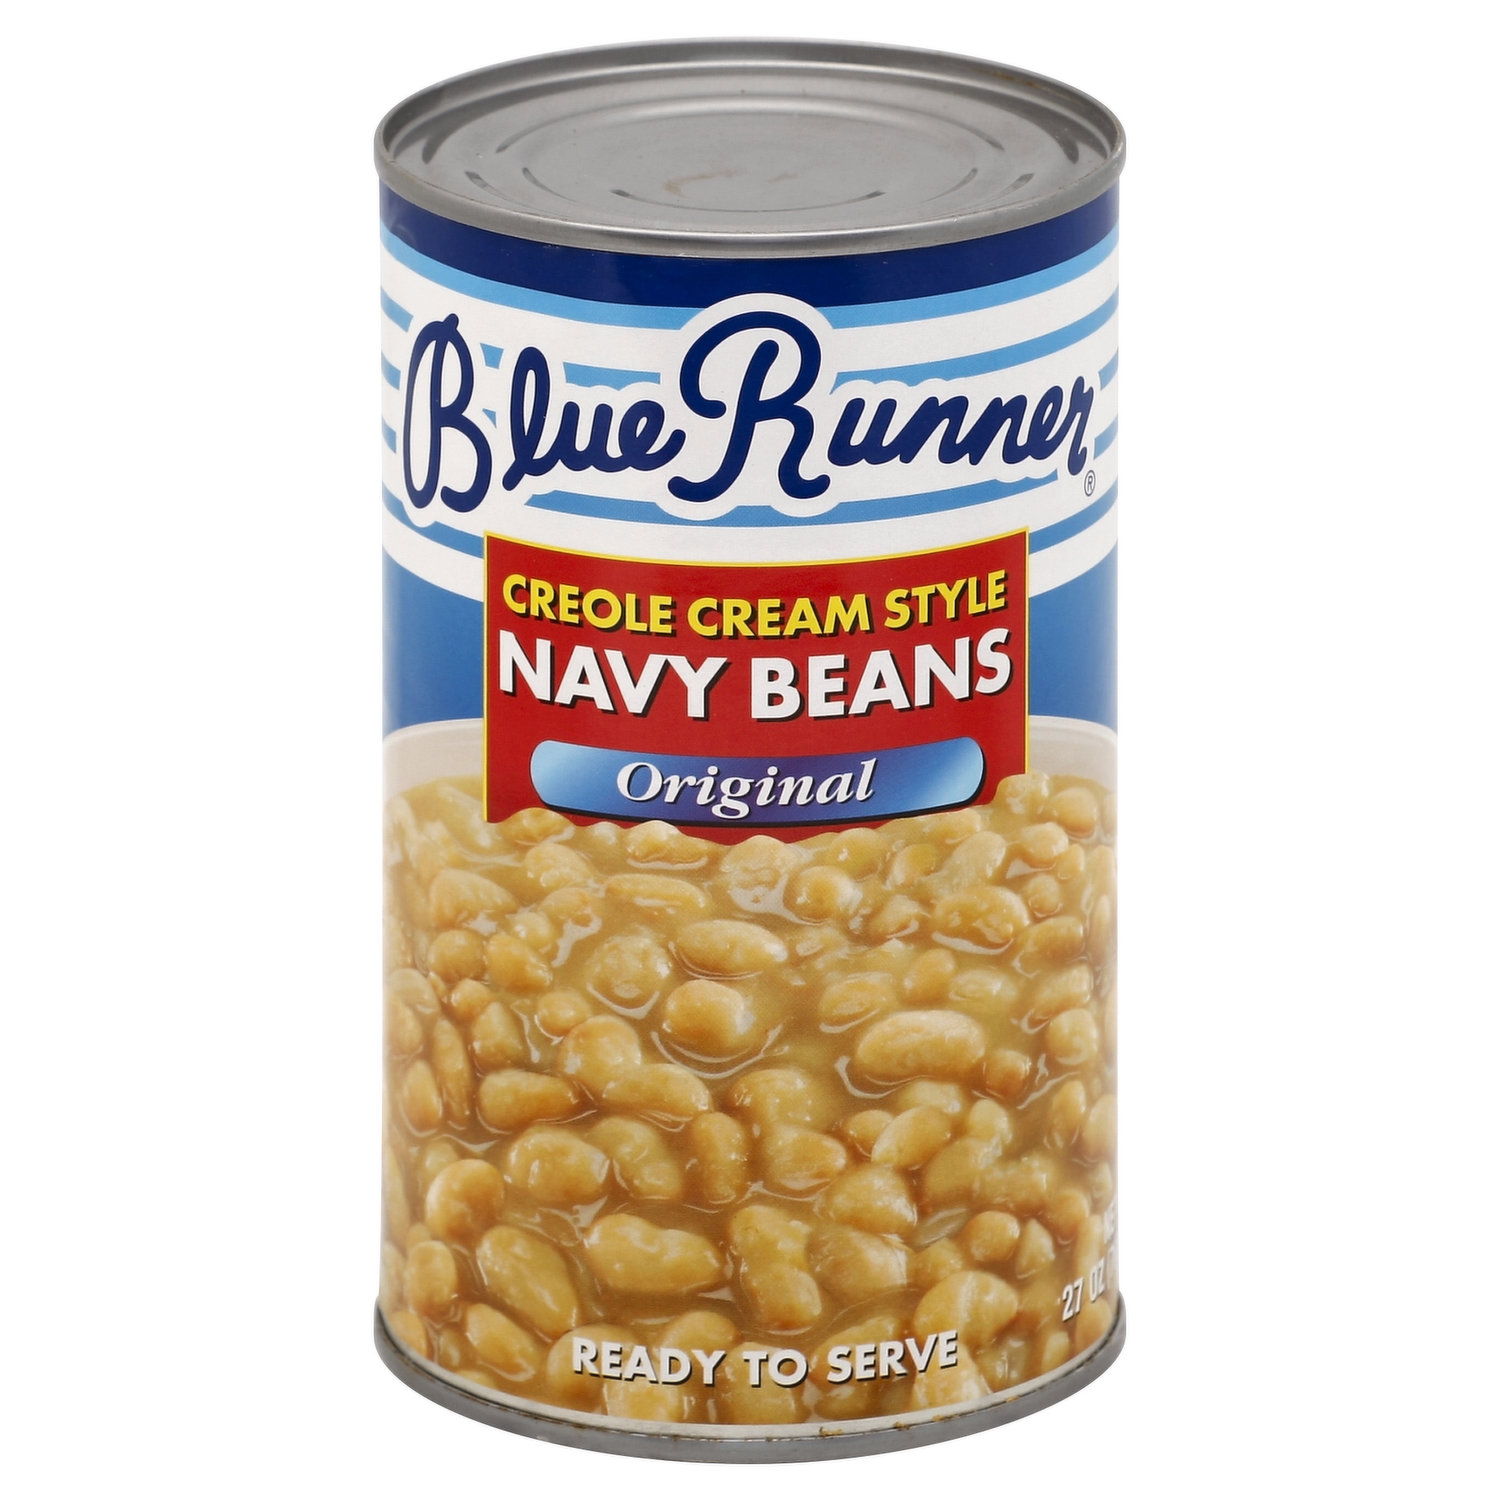 Blue Runner Navy Beans, Creole Cream Style, Original - Brookshire's